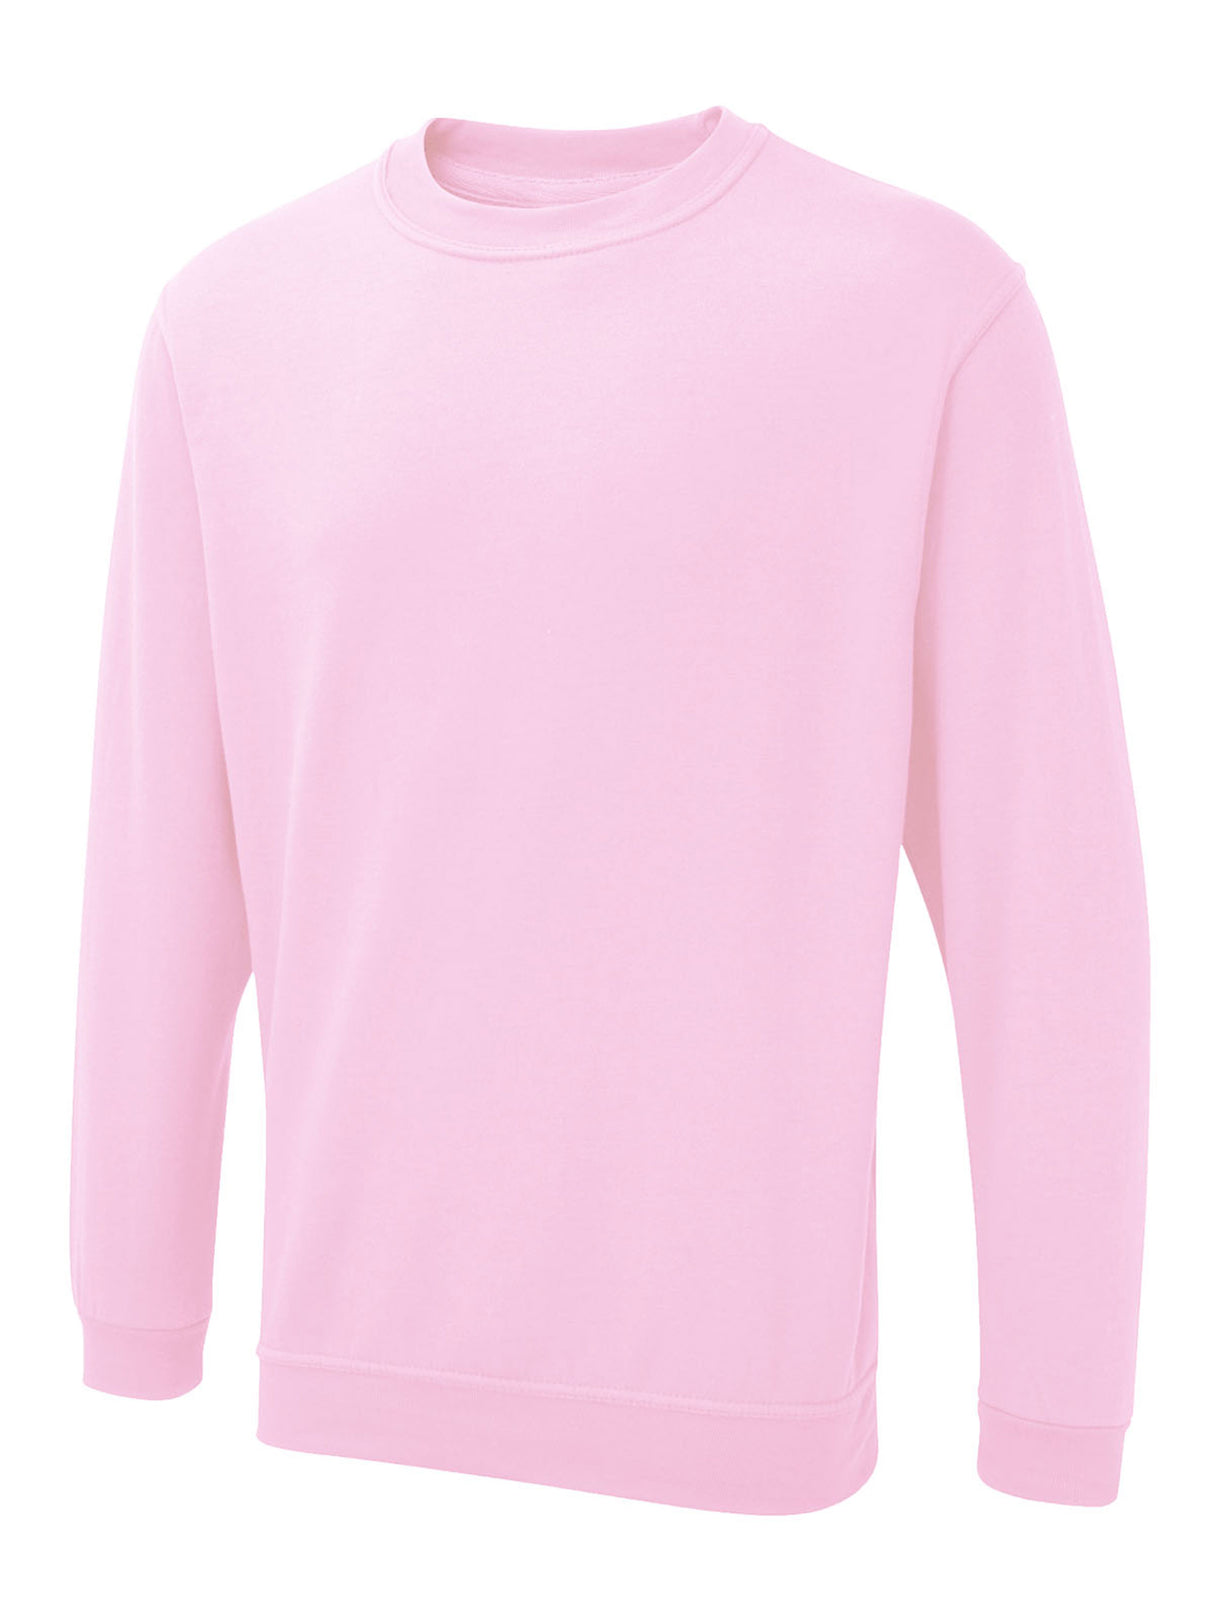 the_ux_sweatshirt_pink